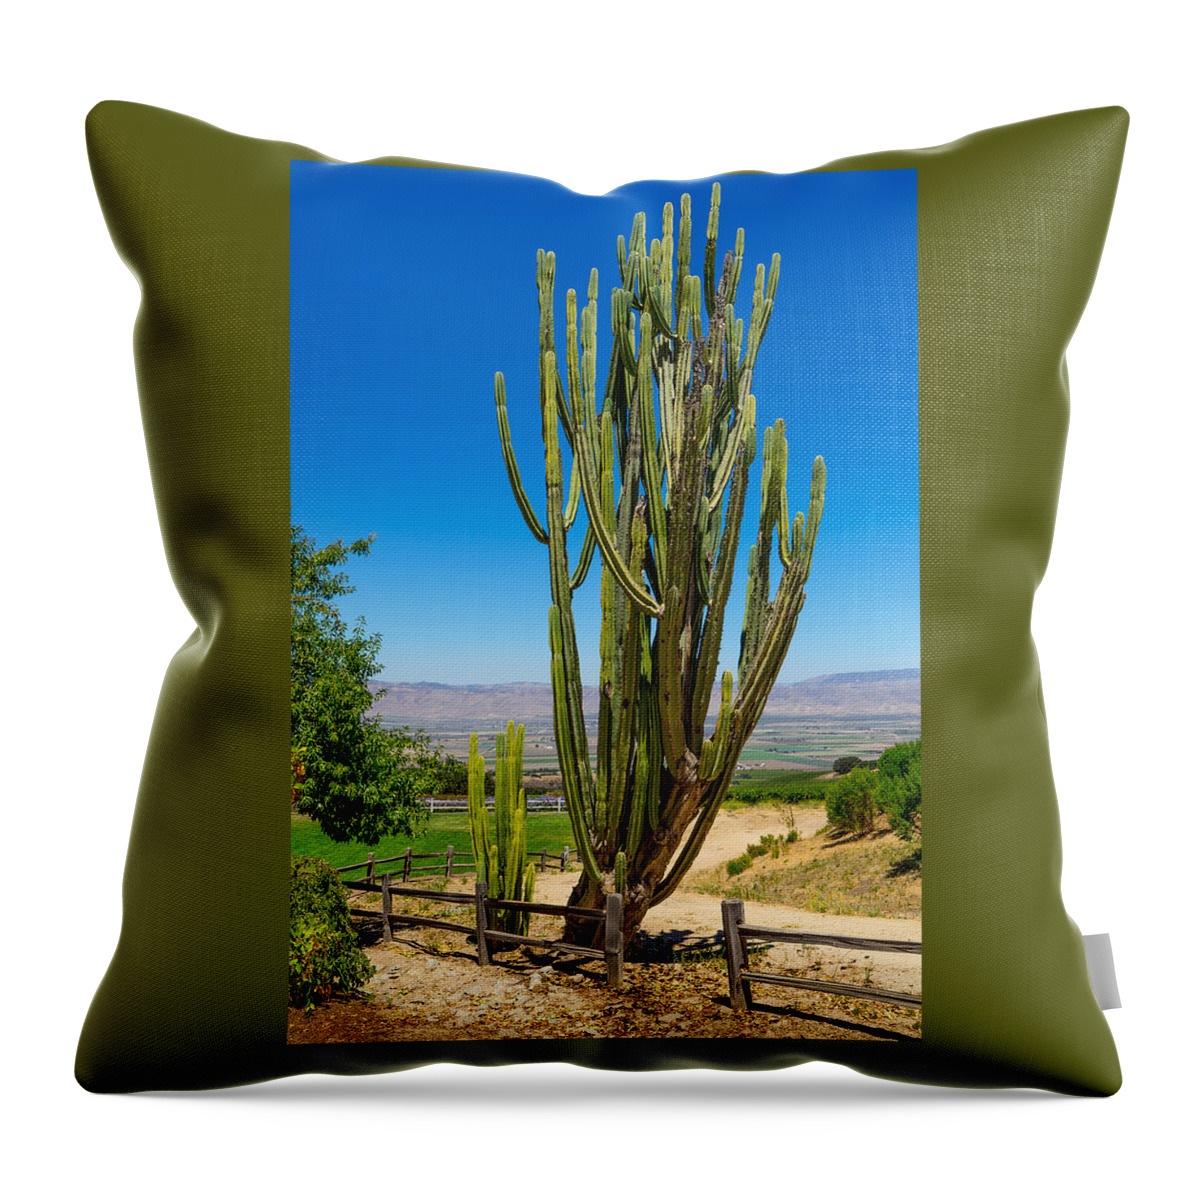 California Throw Pillow featuring the photograph Now That's a Cactus by Derek Dean